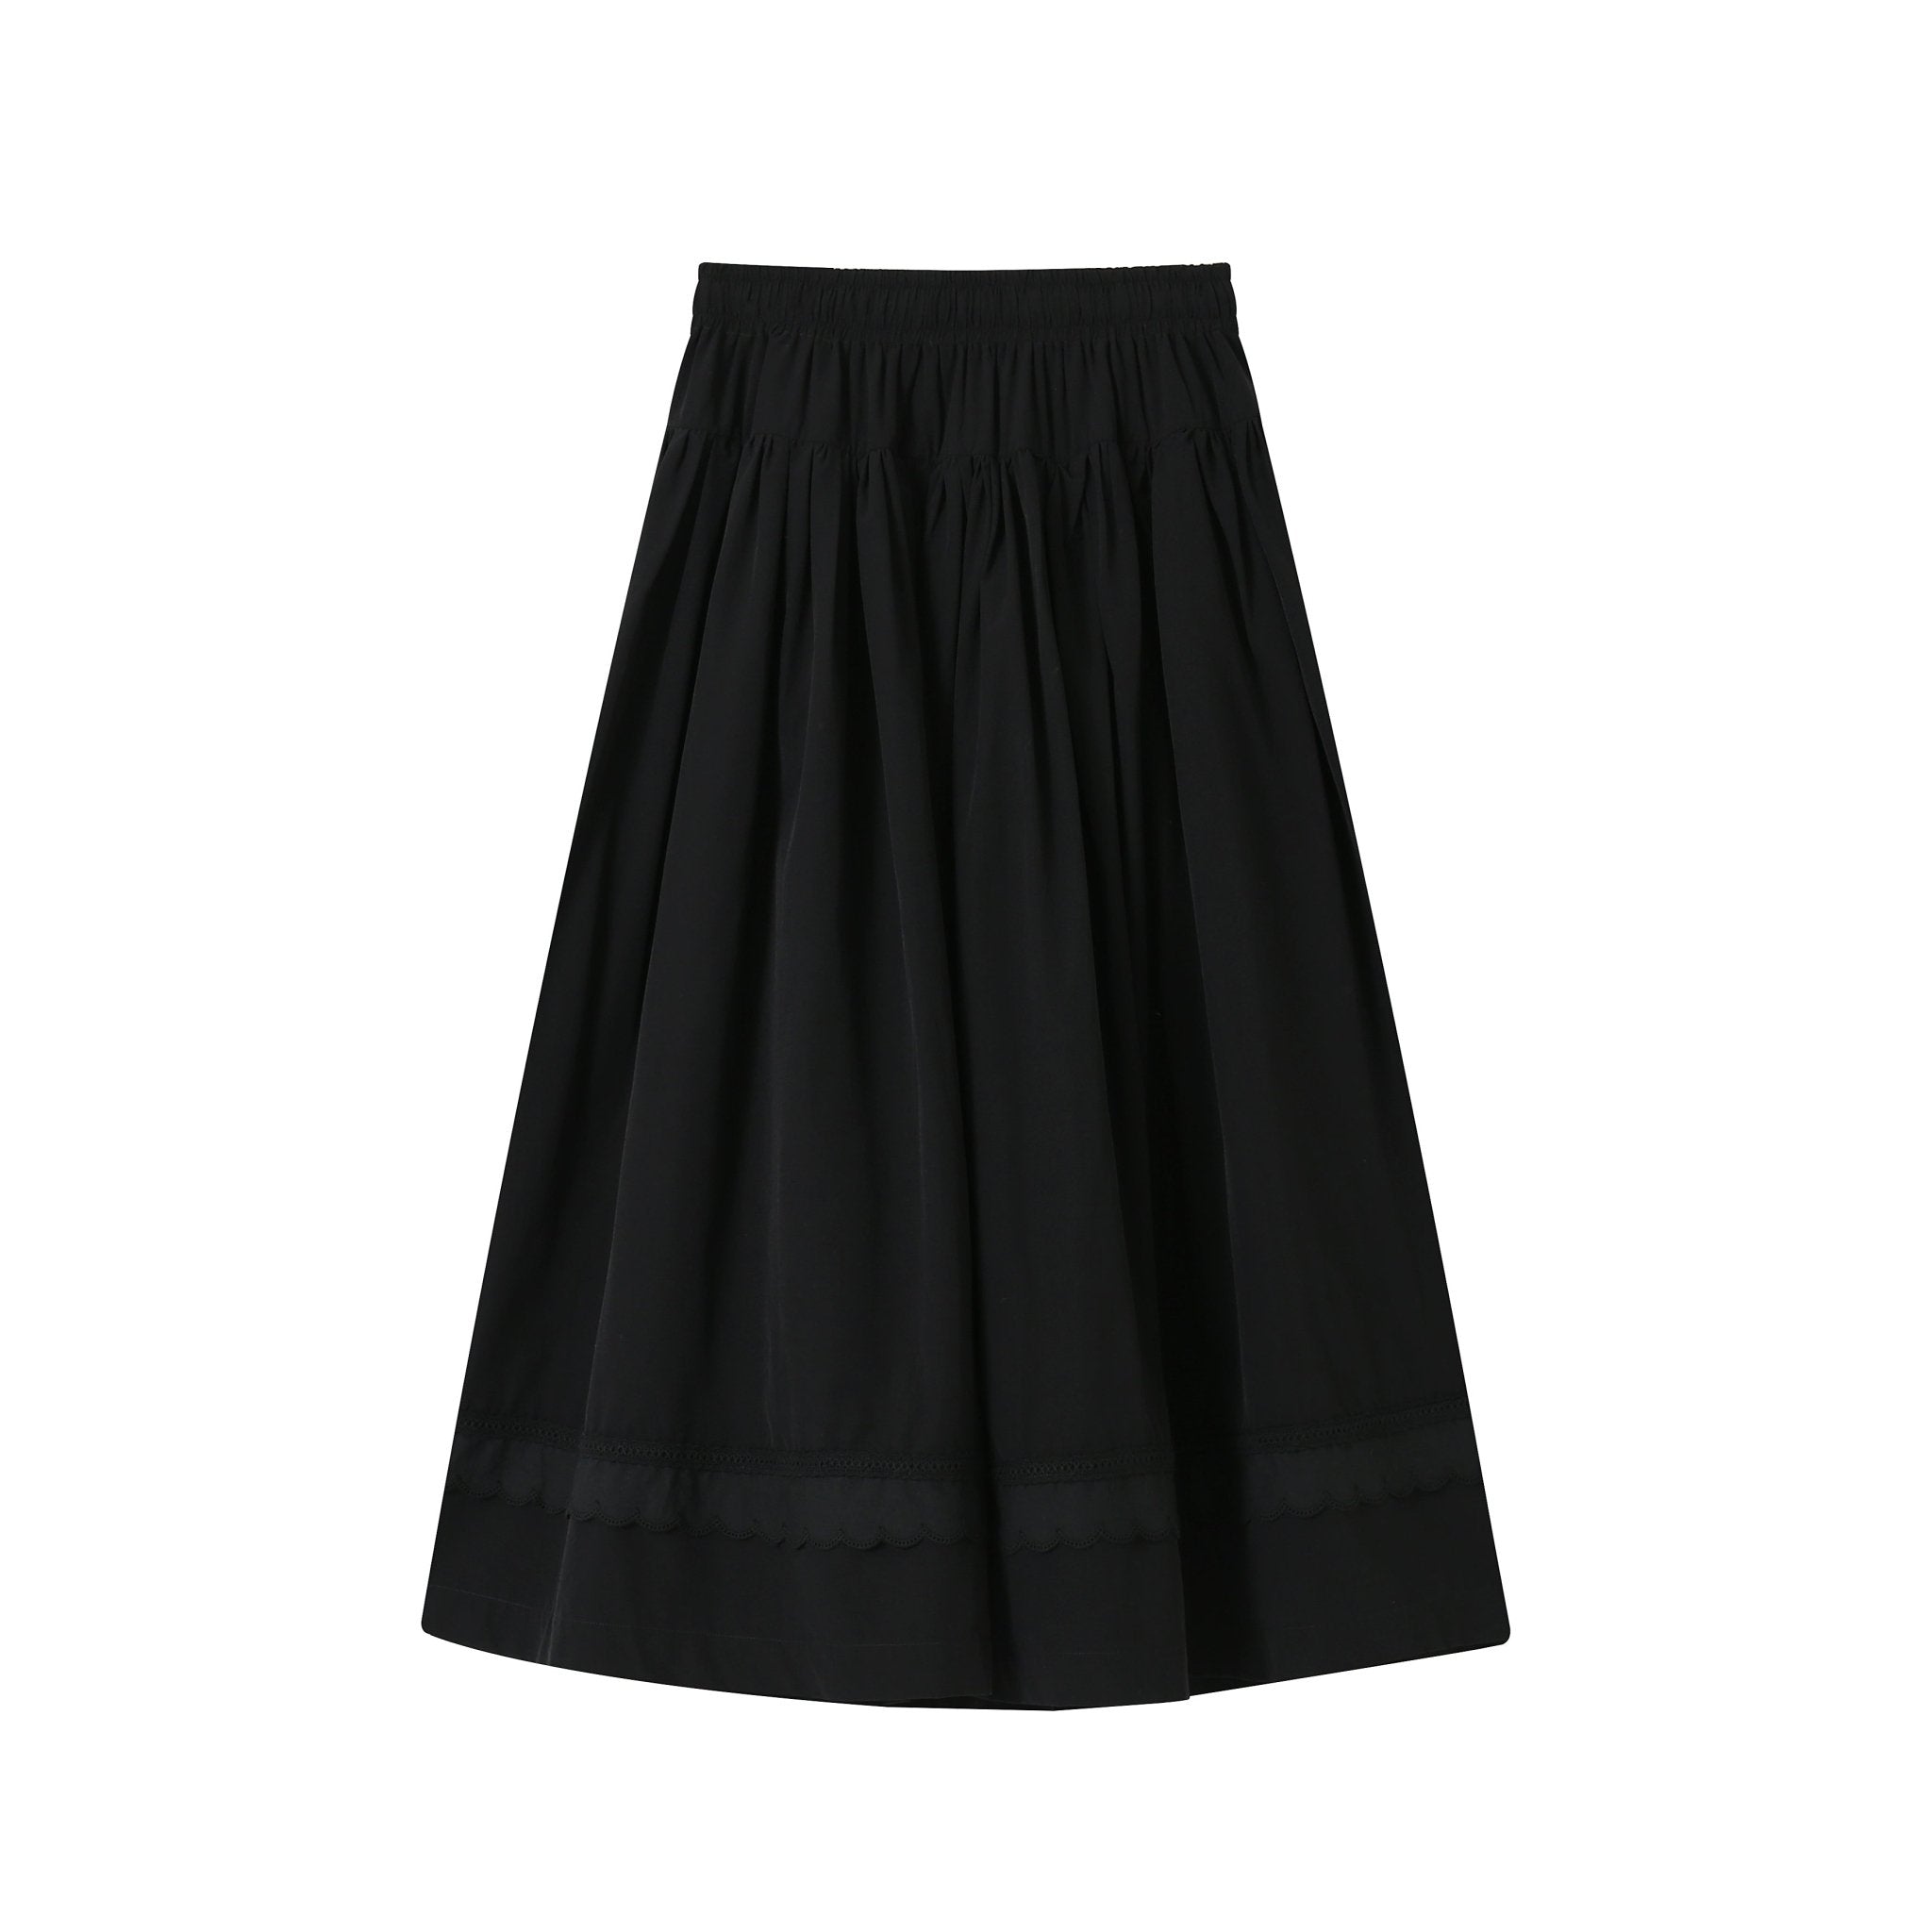 SOMESOWE Black Lace Splicing Airy Skirt | MADA IN CHINA